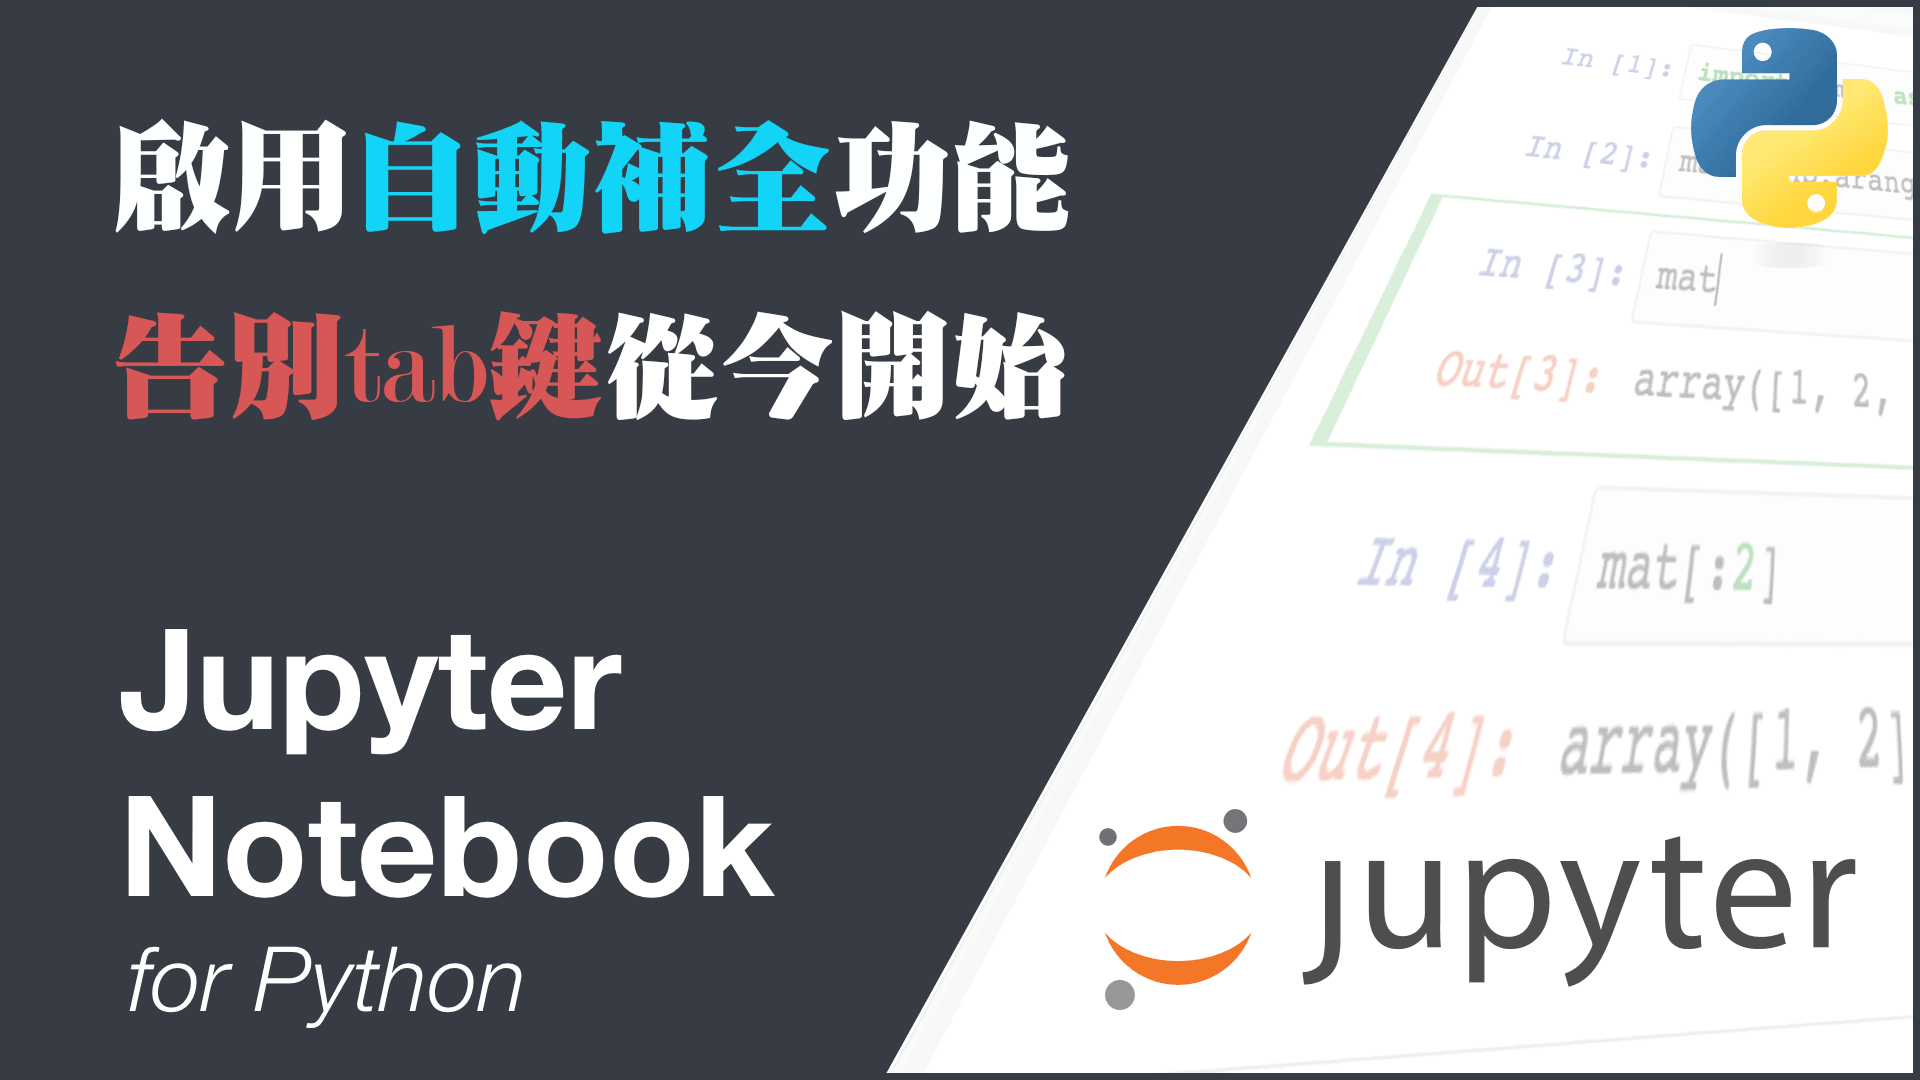 hiterland - Jupyter Notebook 啟用自動補全、自動完成函數名稱，不用再按tab了！